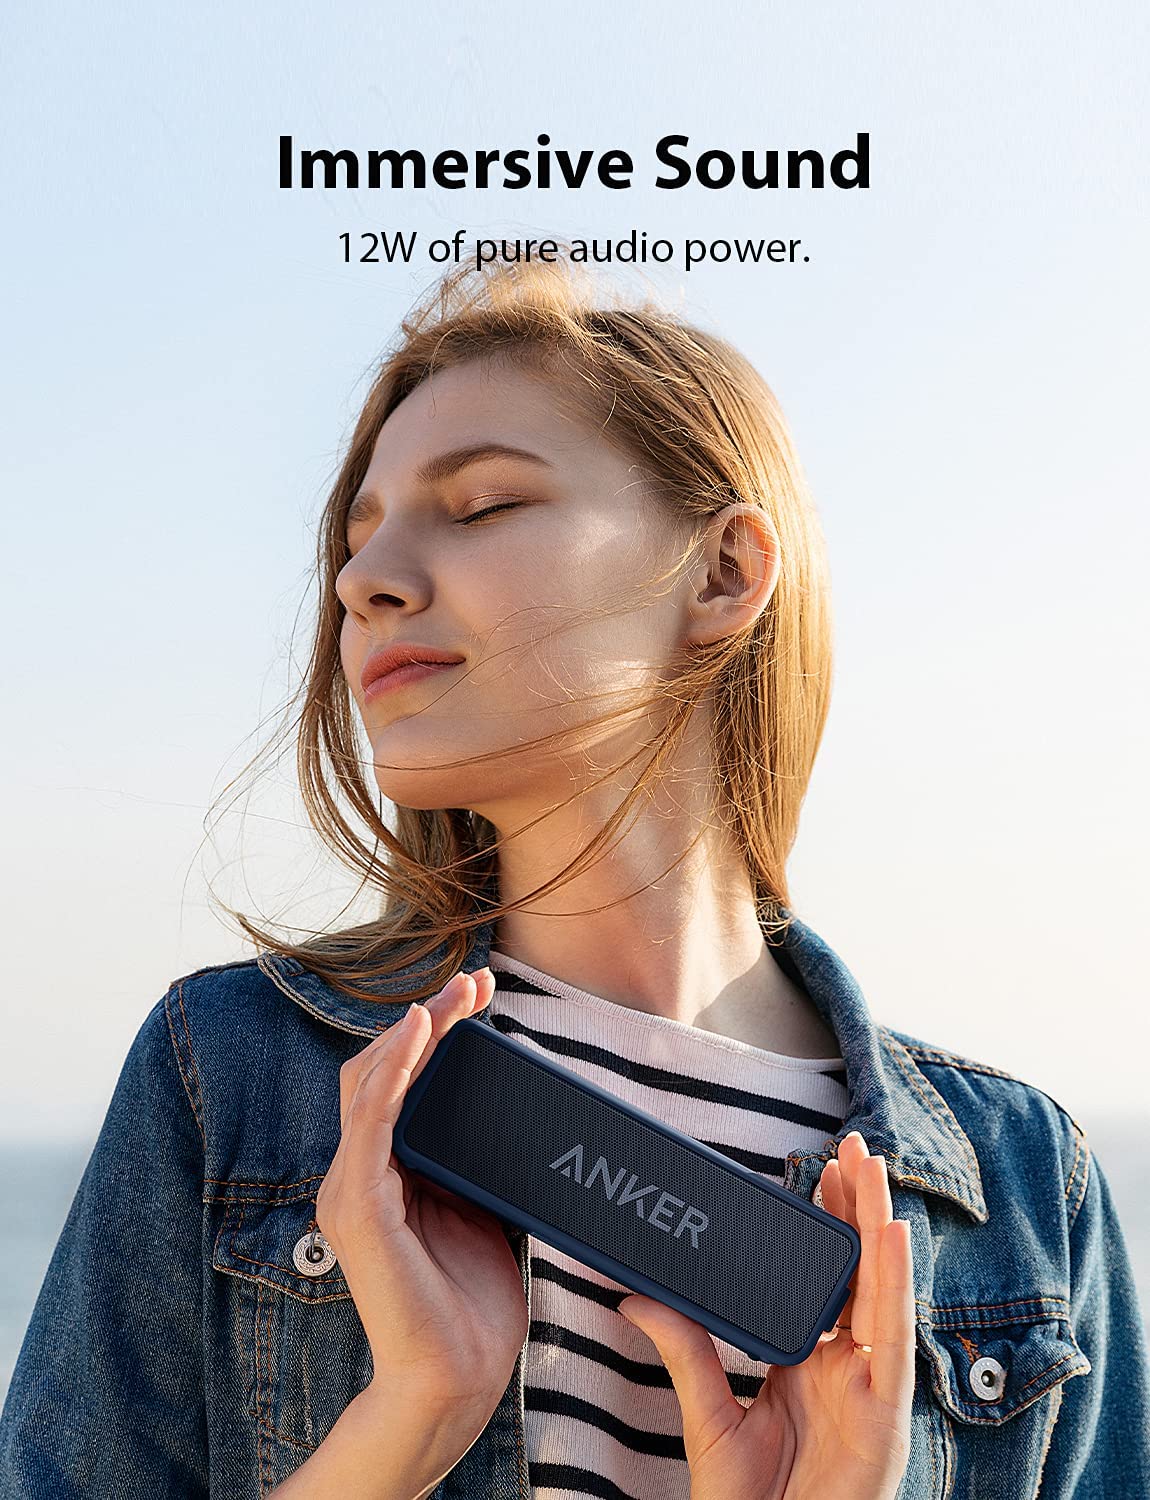 Anker Soundcore 2 Portable Wireless Bluetooth Speaker Dual-Driver Speaker Built-in Mic, Waterproof ,12W ,Teal - image 4 of 6